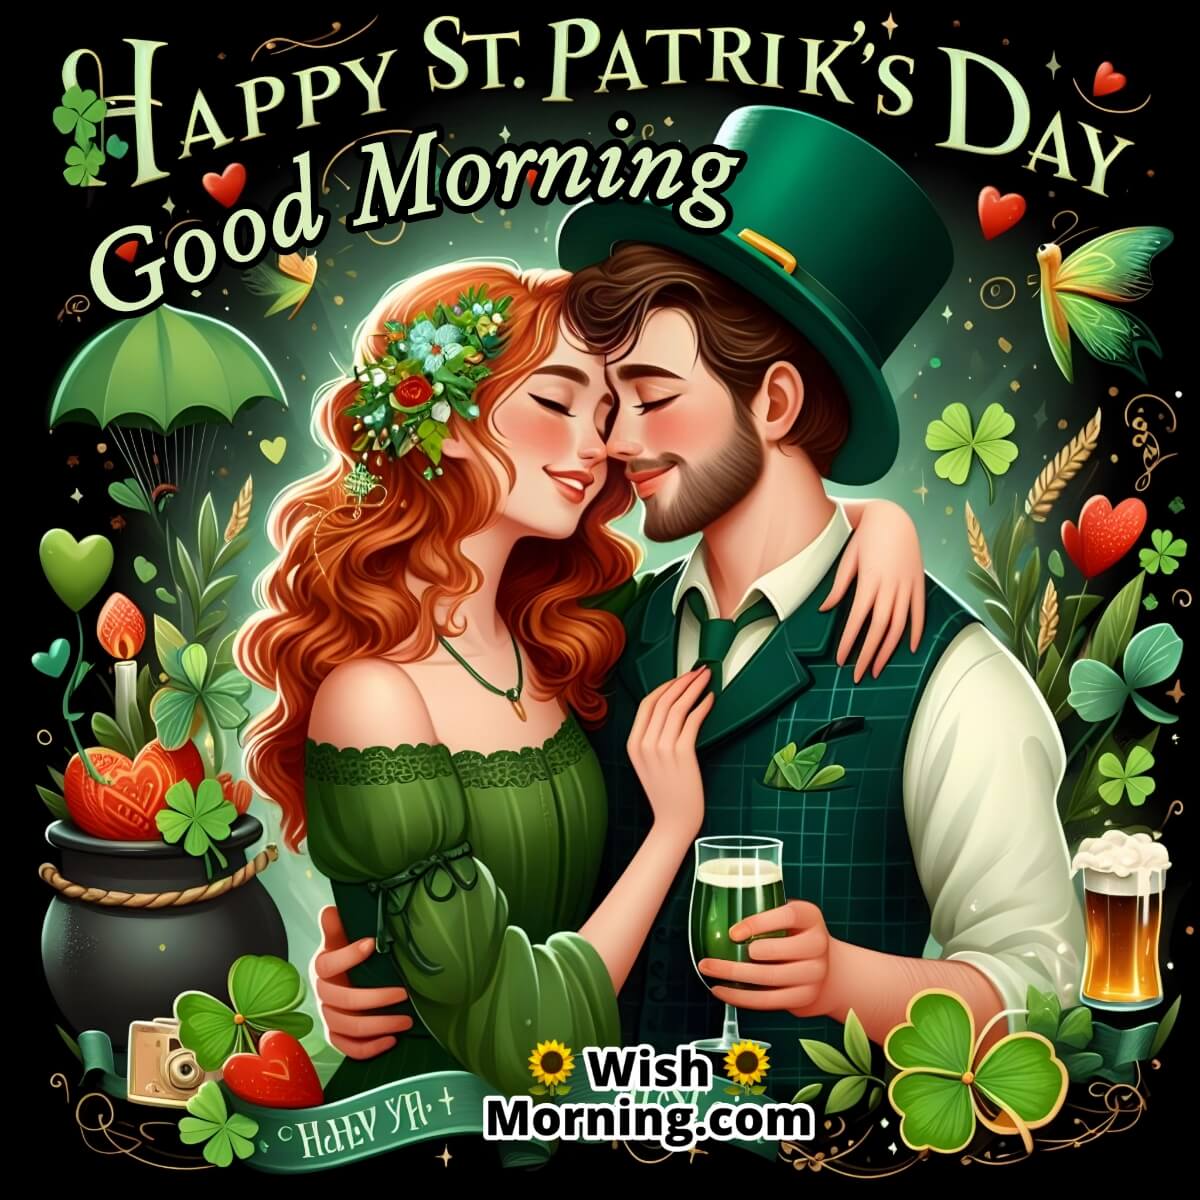 Good Morning Love St. Patrick's Day